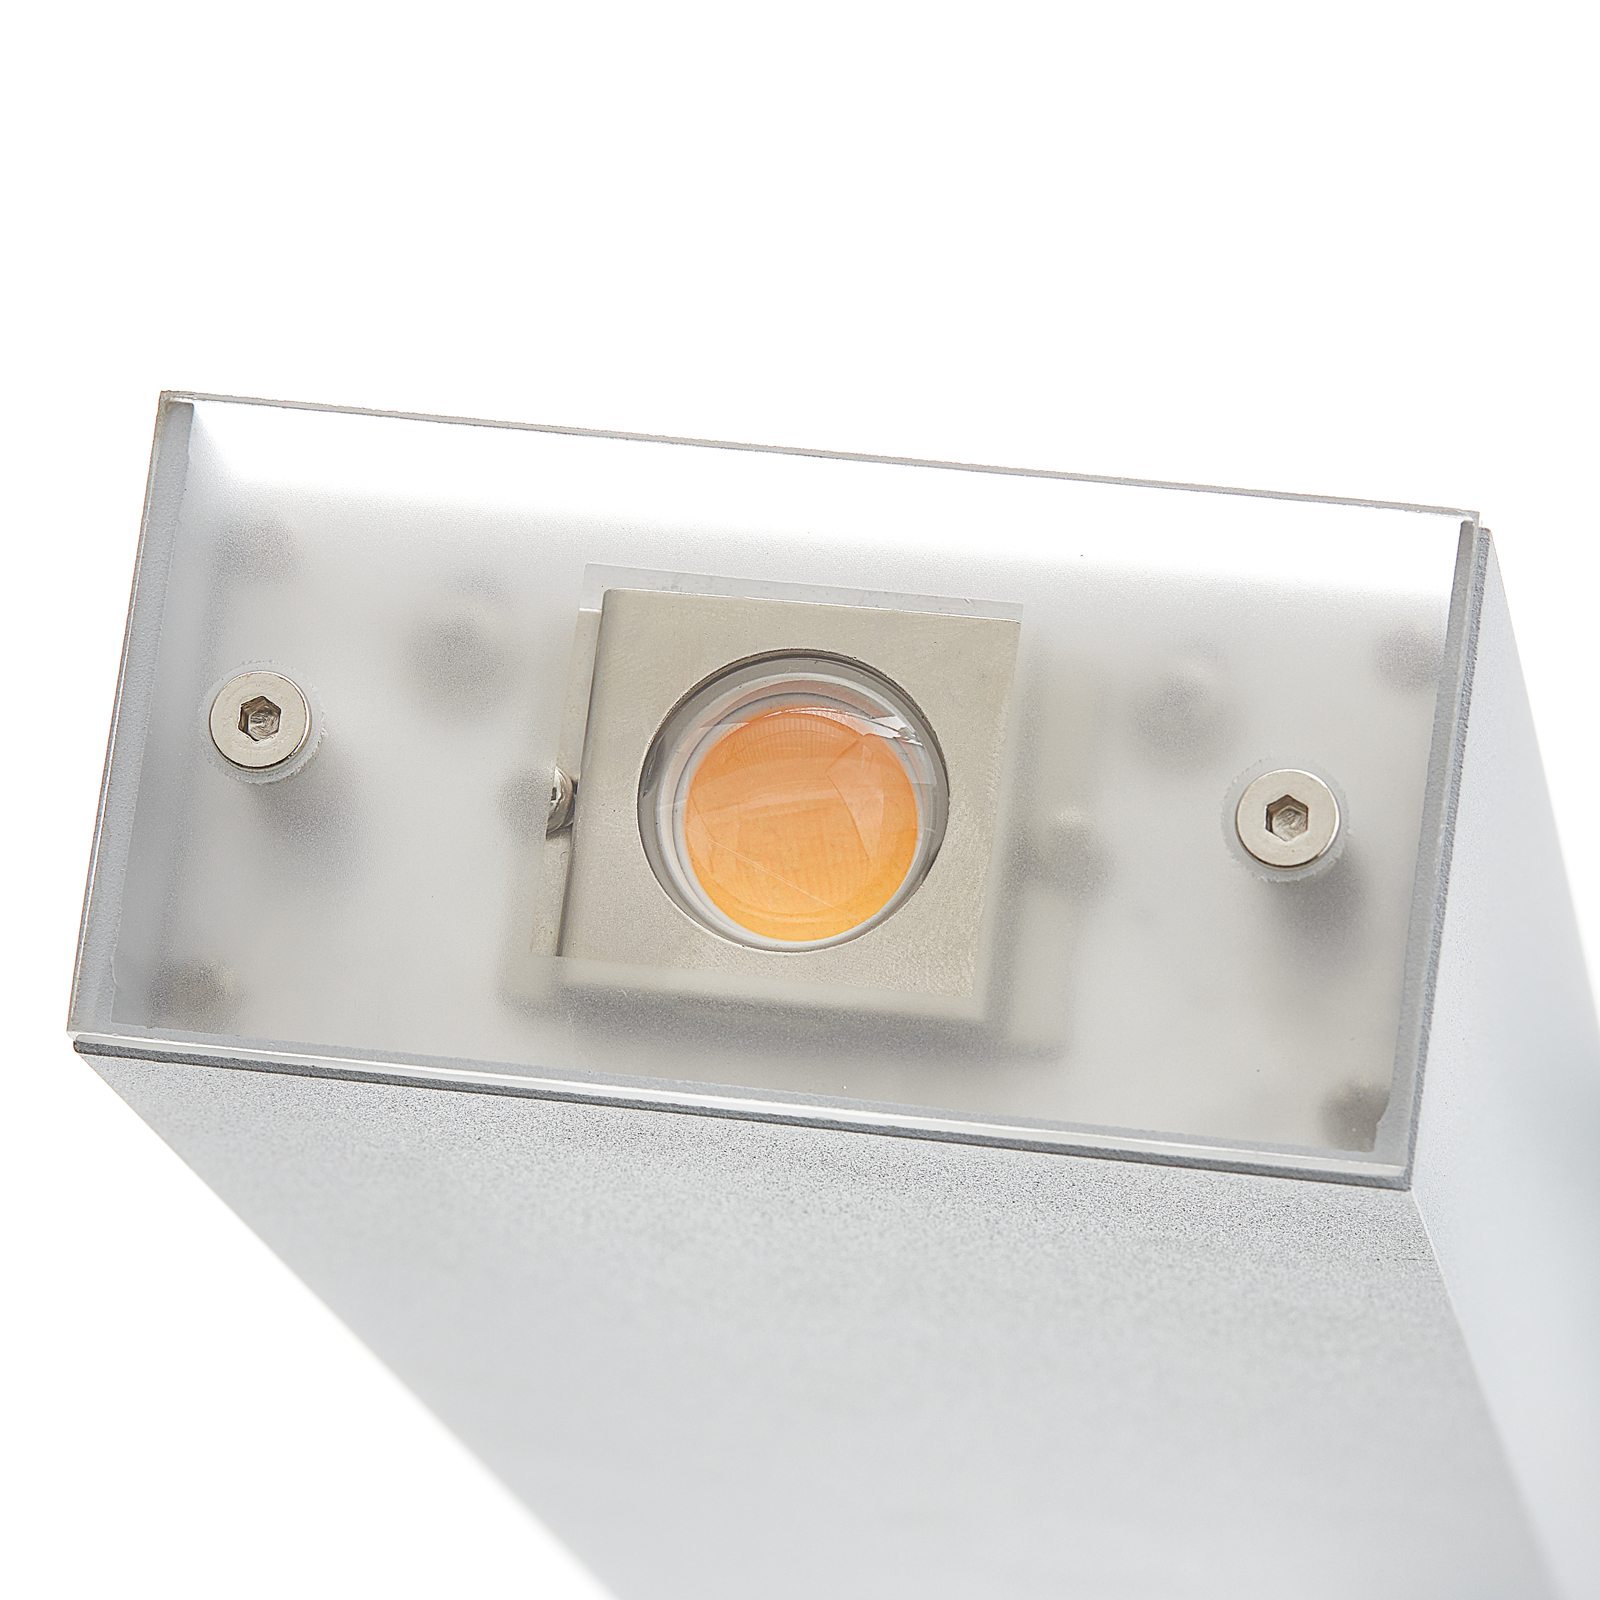 Lucande Anita LED fali lámpa ezüst magassága 26 cm